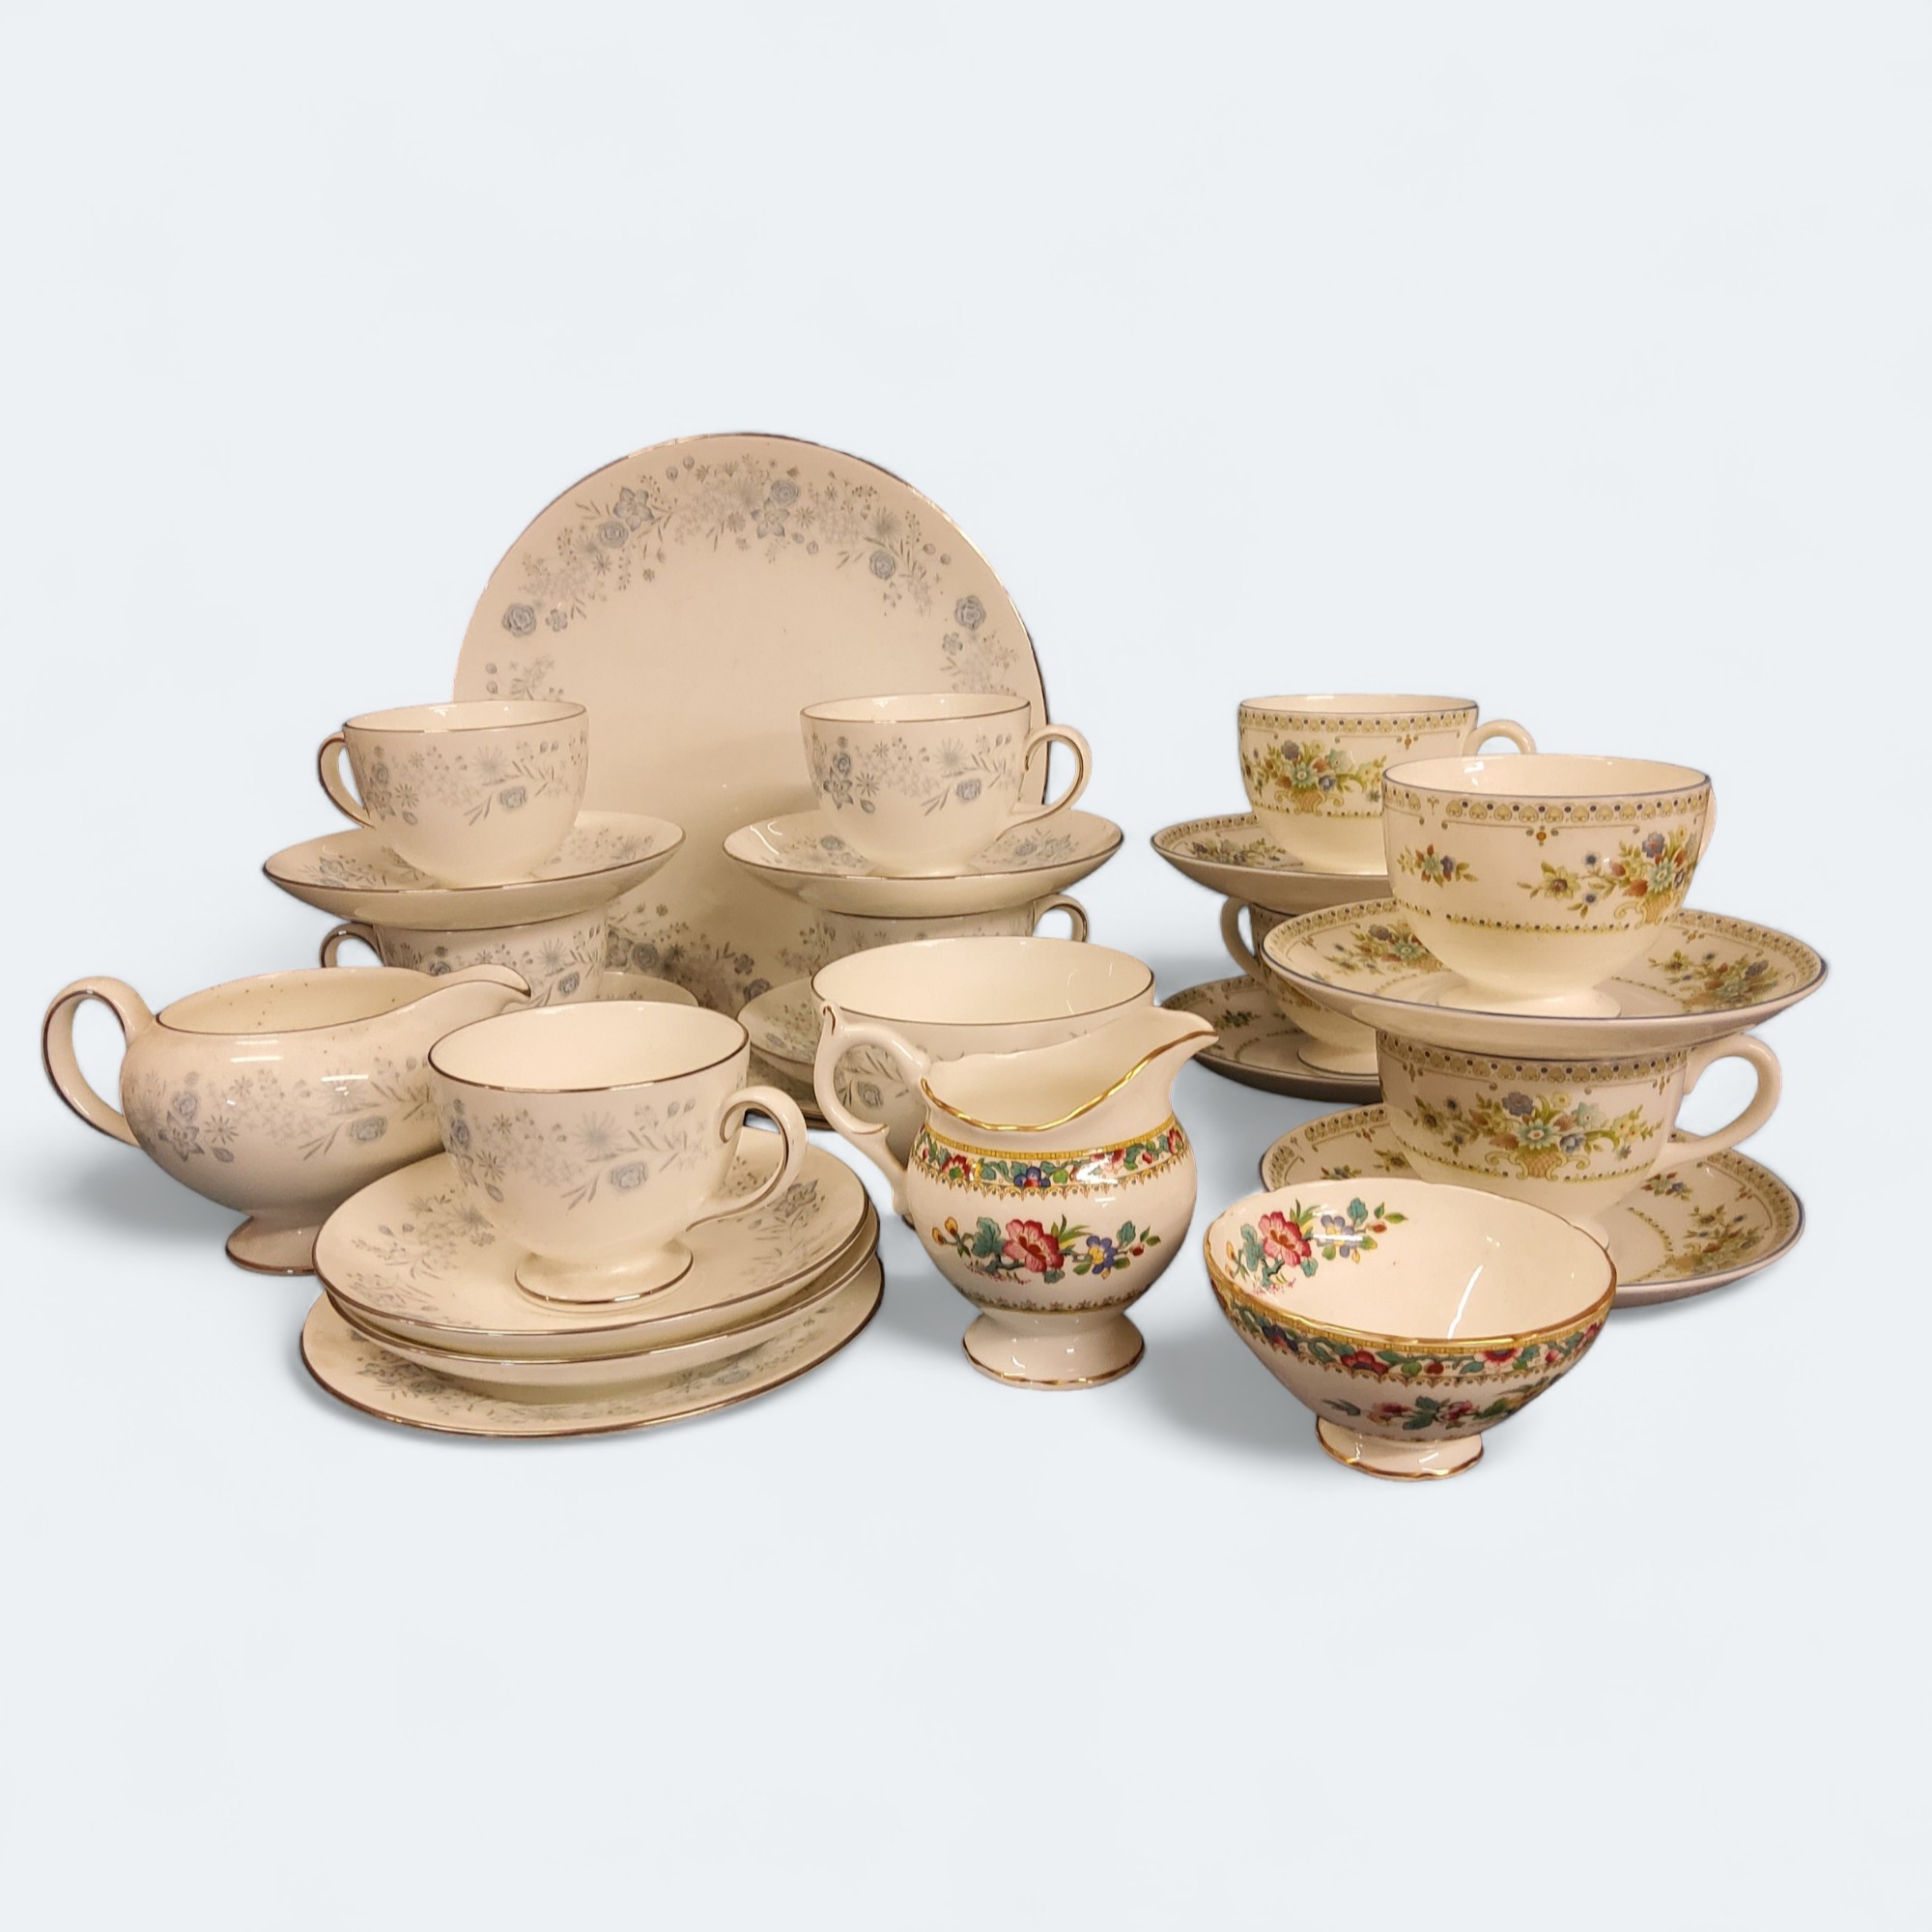 A Wedgwood Belle Fleur pattern  tea service, for five, comprising cups, saucers, side plates, milk